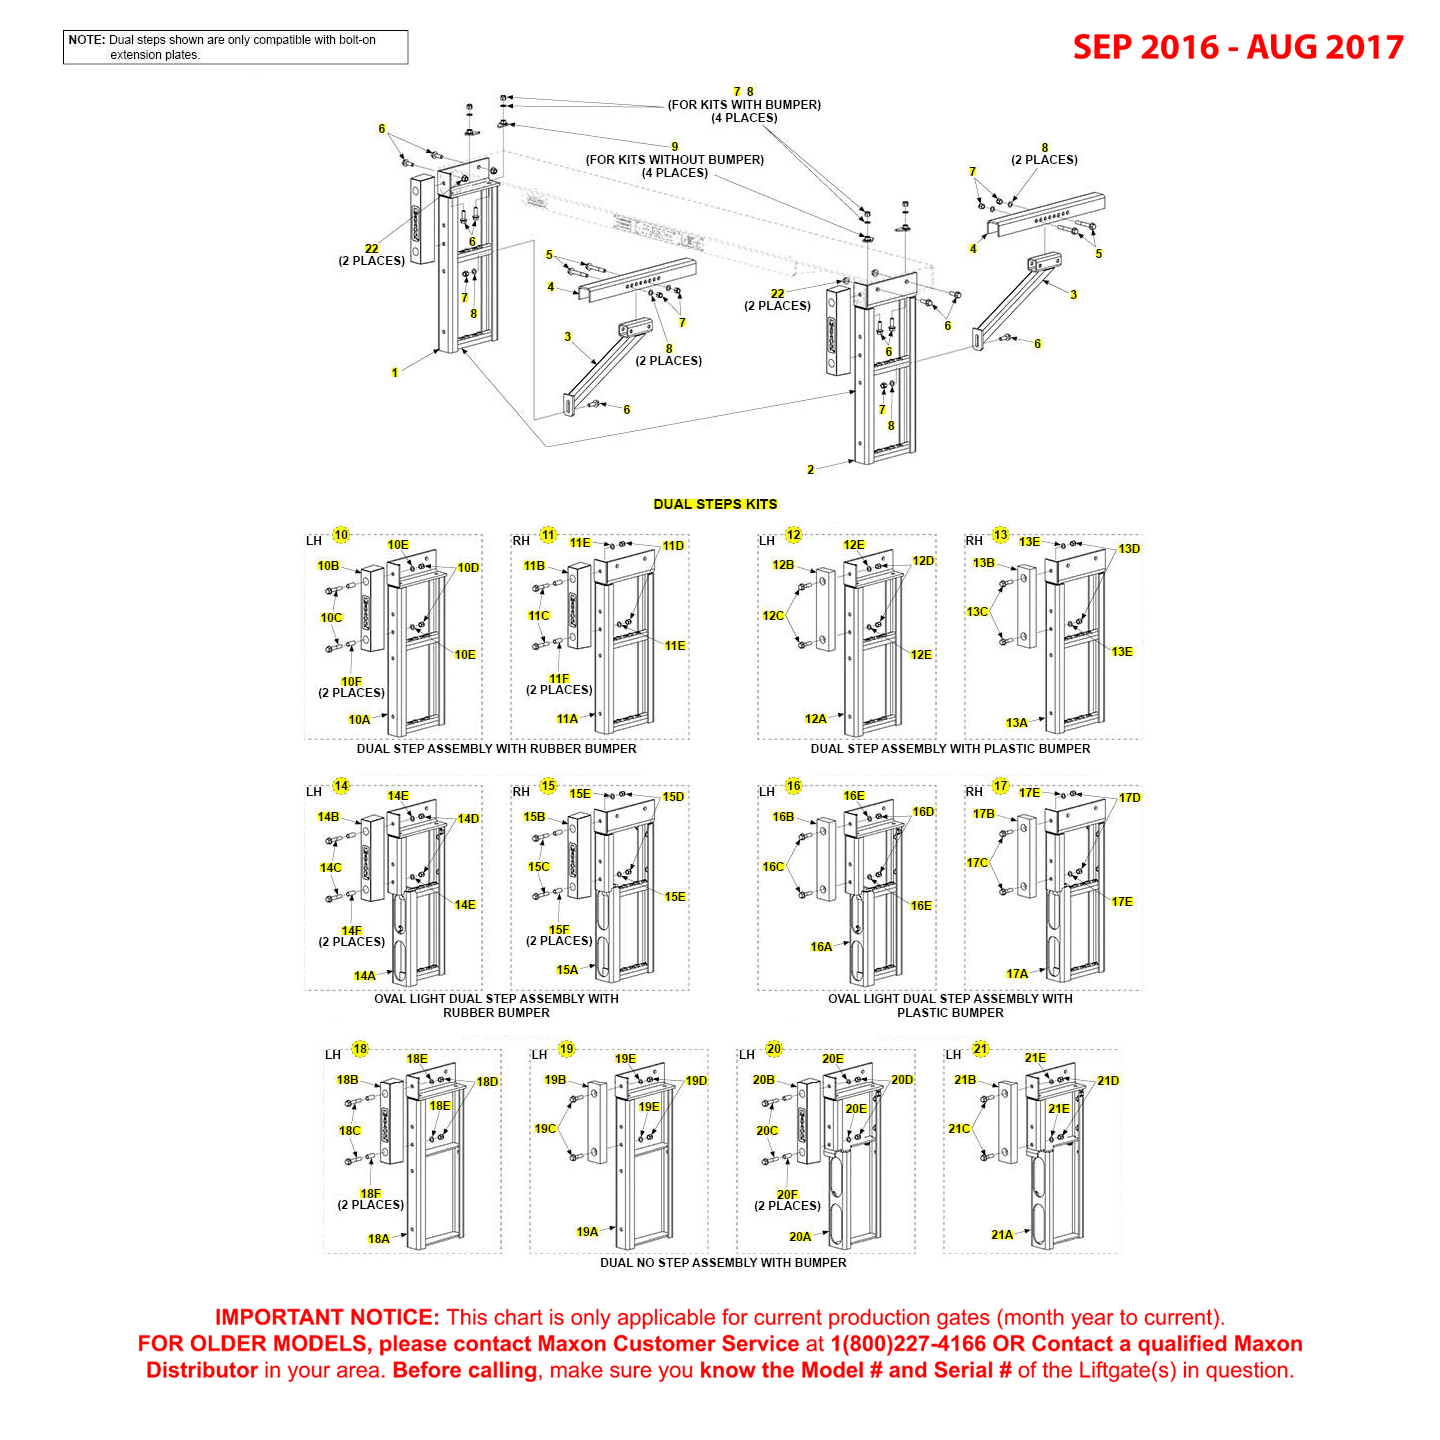 Maxon GPT (Sep 2016 - Aug 2017) Dual Step Kits Diagram